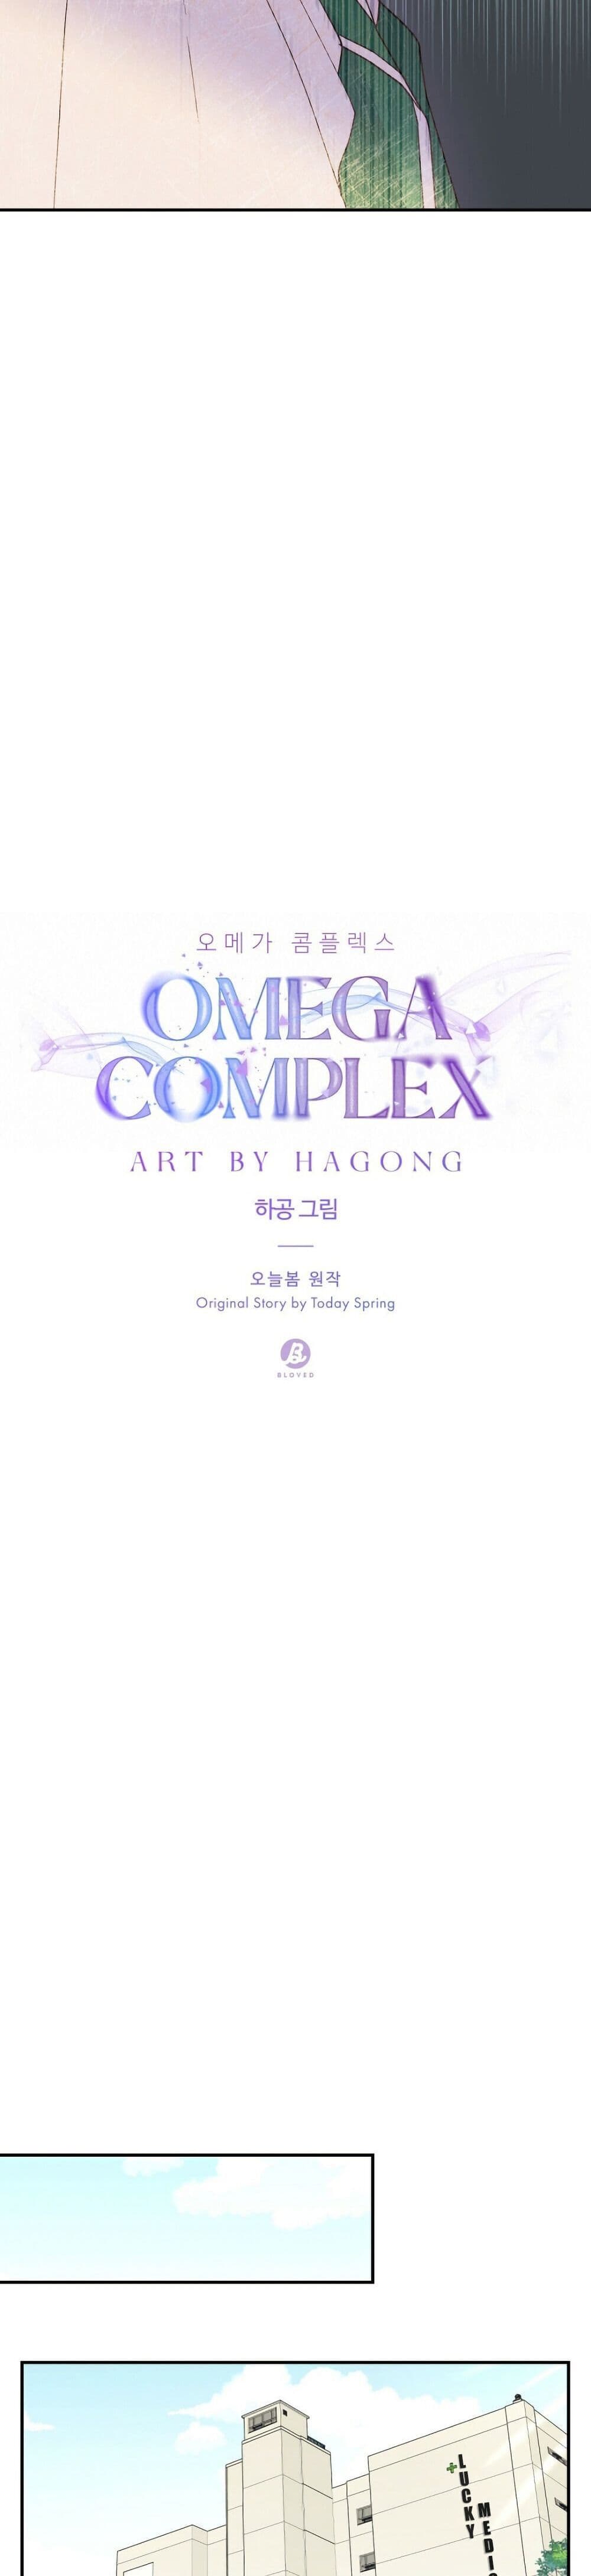 Omega Complex 15 13